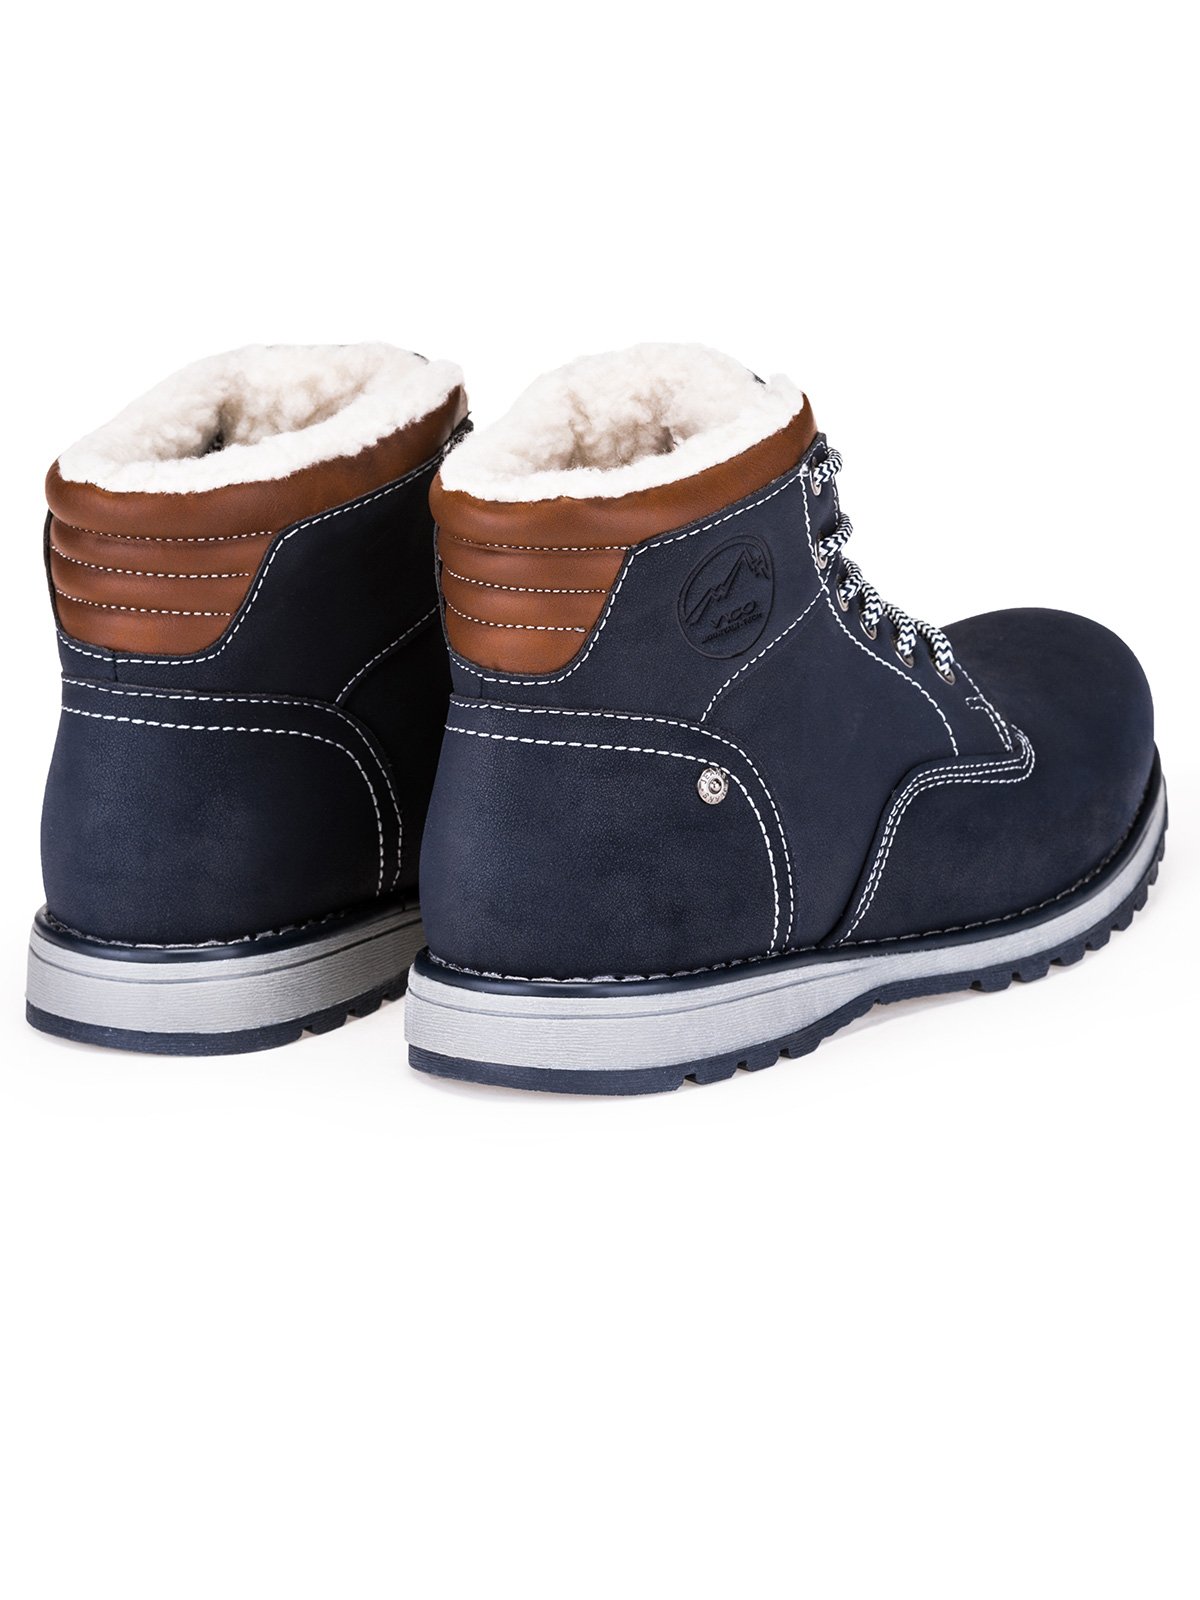 Men's winter boots T248 - navy | MODONE wholesale ...